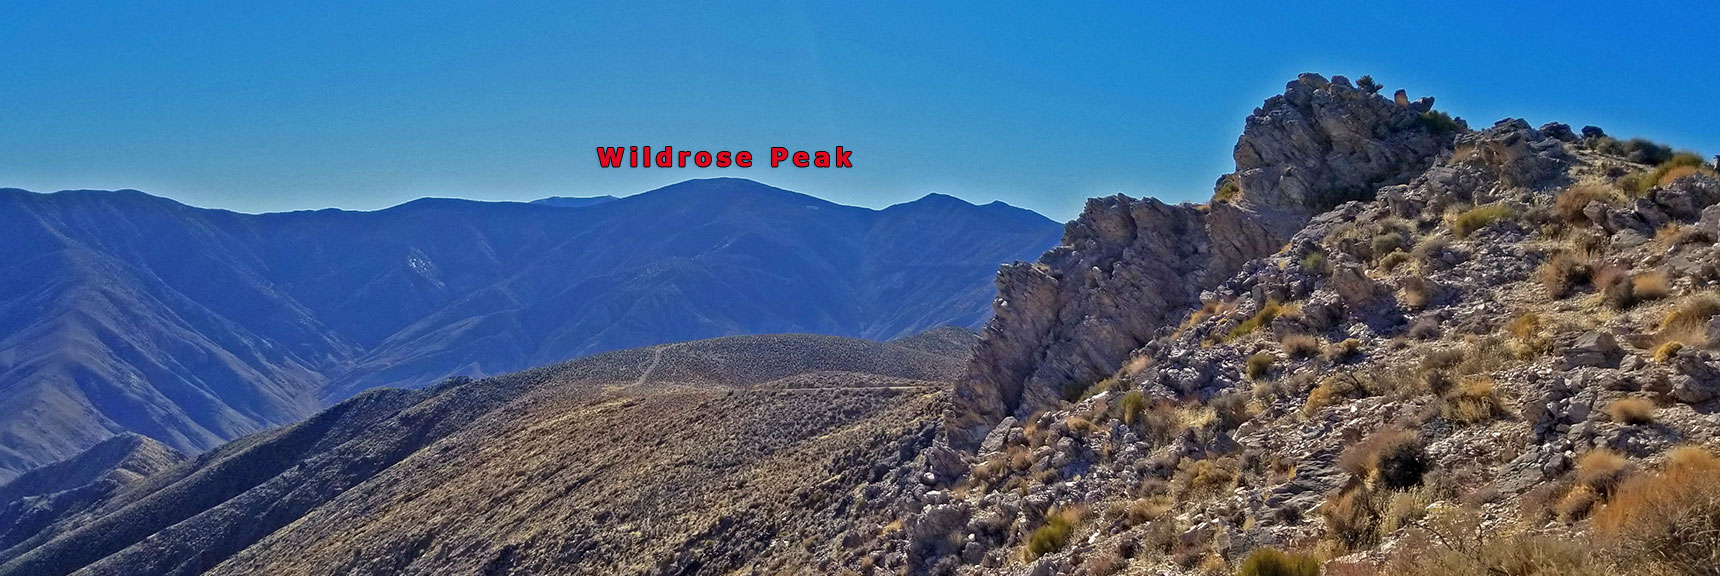 Southern View: Wildrose Peak, Rodger's Peak, Telescope Peak | Aguereberry Point | Panamint Mountain Range | Death Valley National Park, California